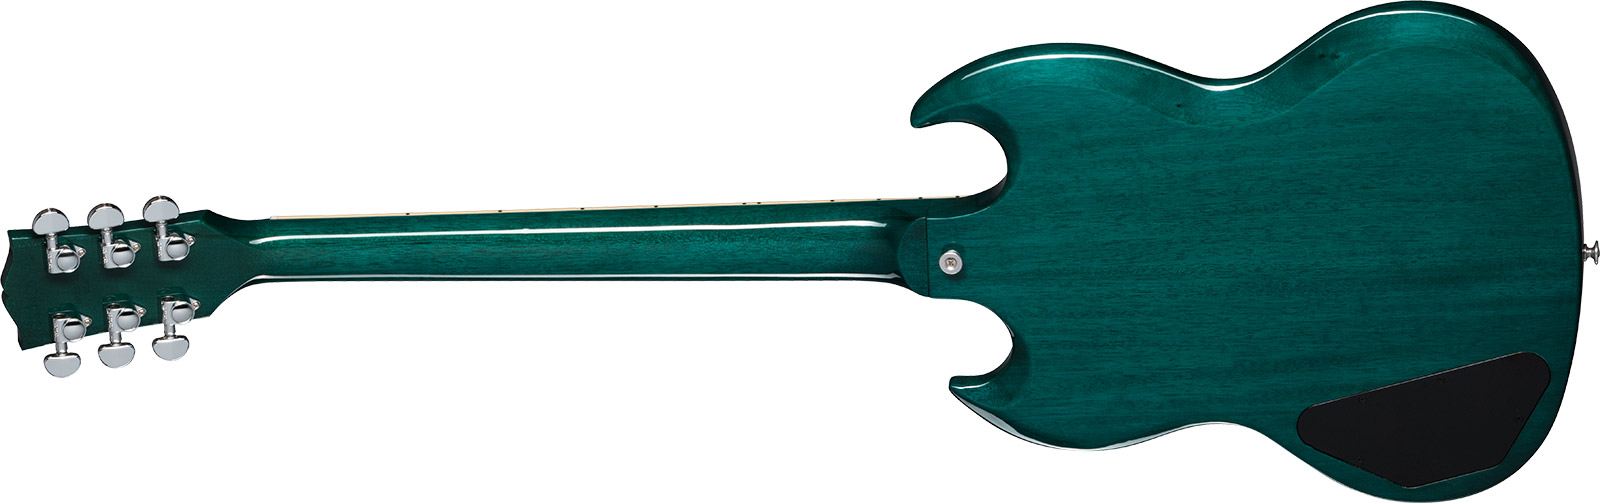 Gibson Sg Standard Custom Color 2h Ht Rw - Translucent Teal - Guitarra eléctrica de doble corte - Variation 1